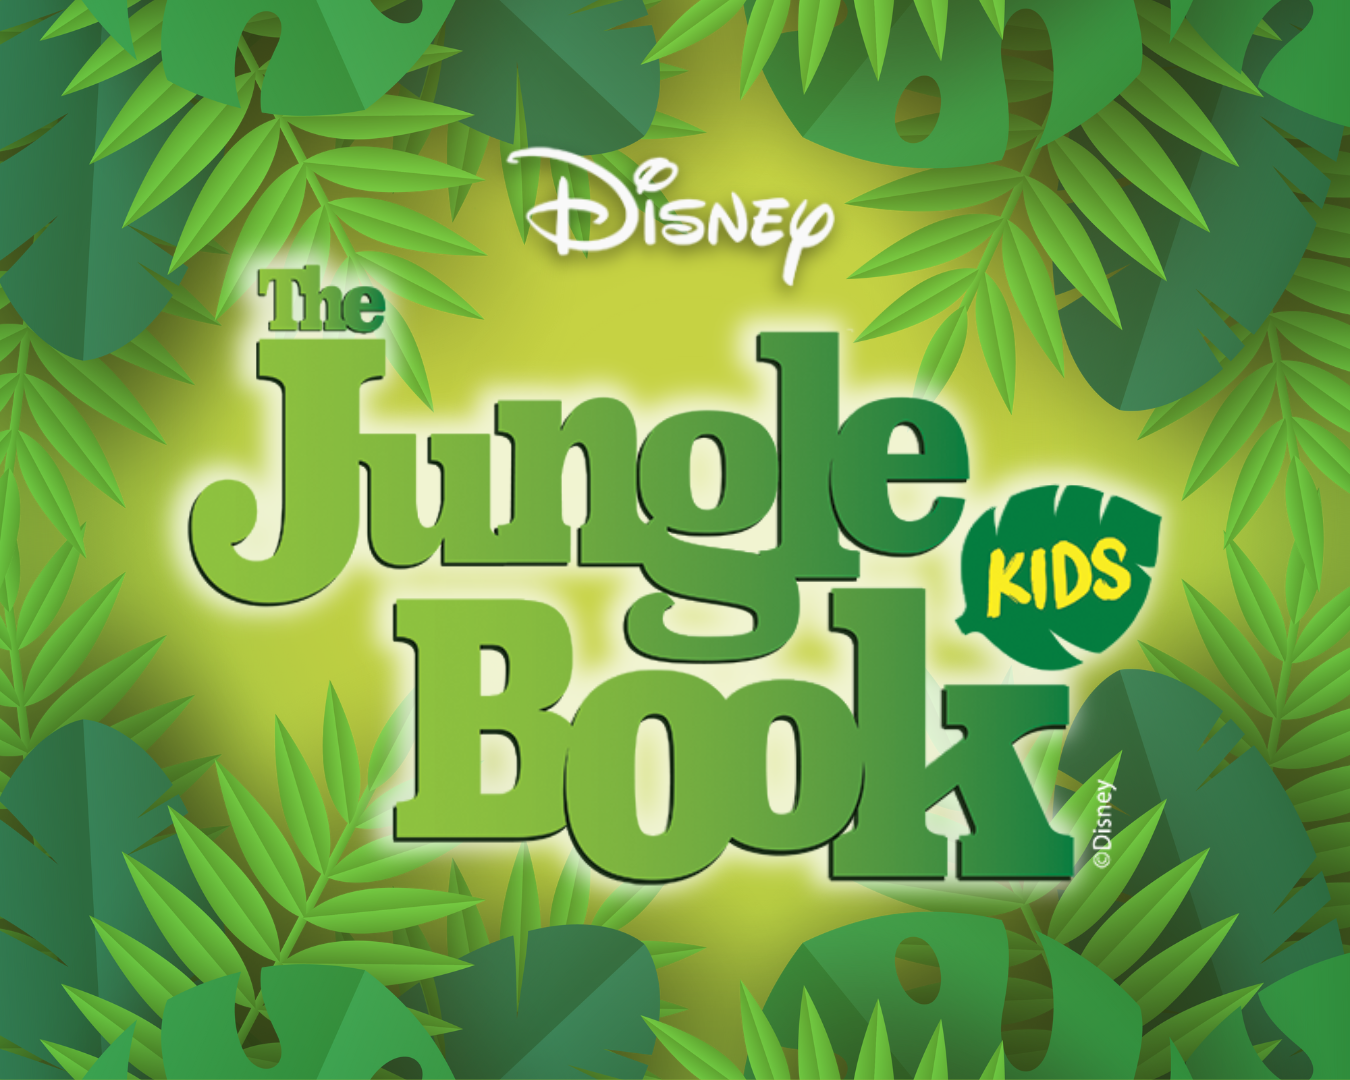 Disney's The Jungle Book KIDS graphic, leaves, jungle theme